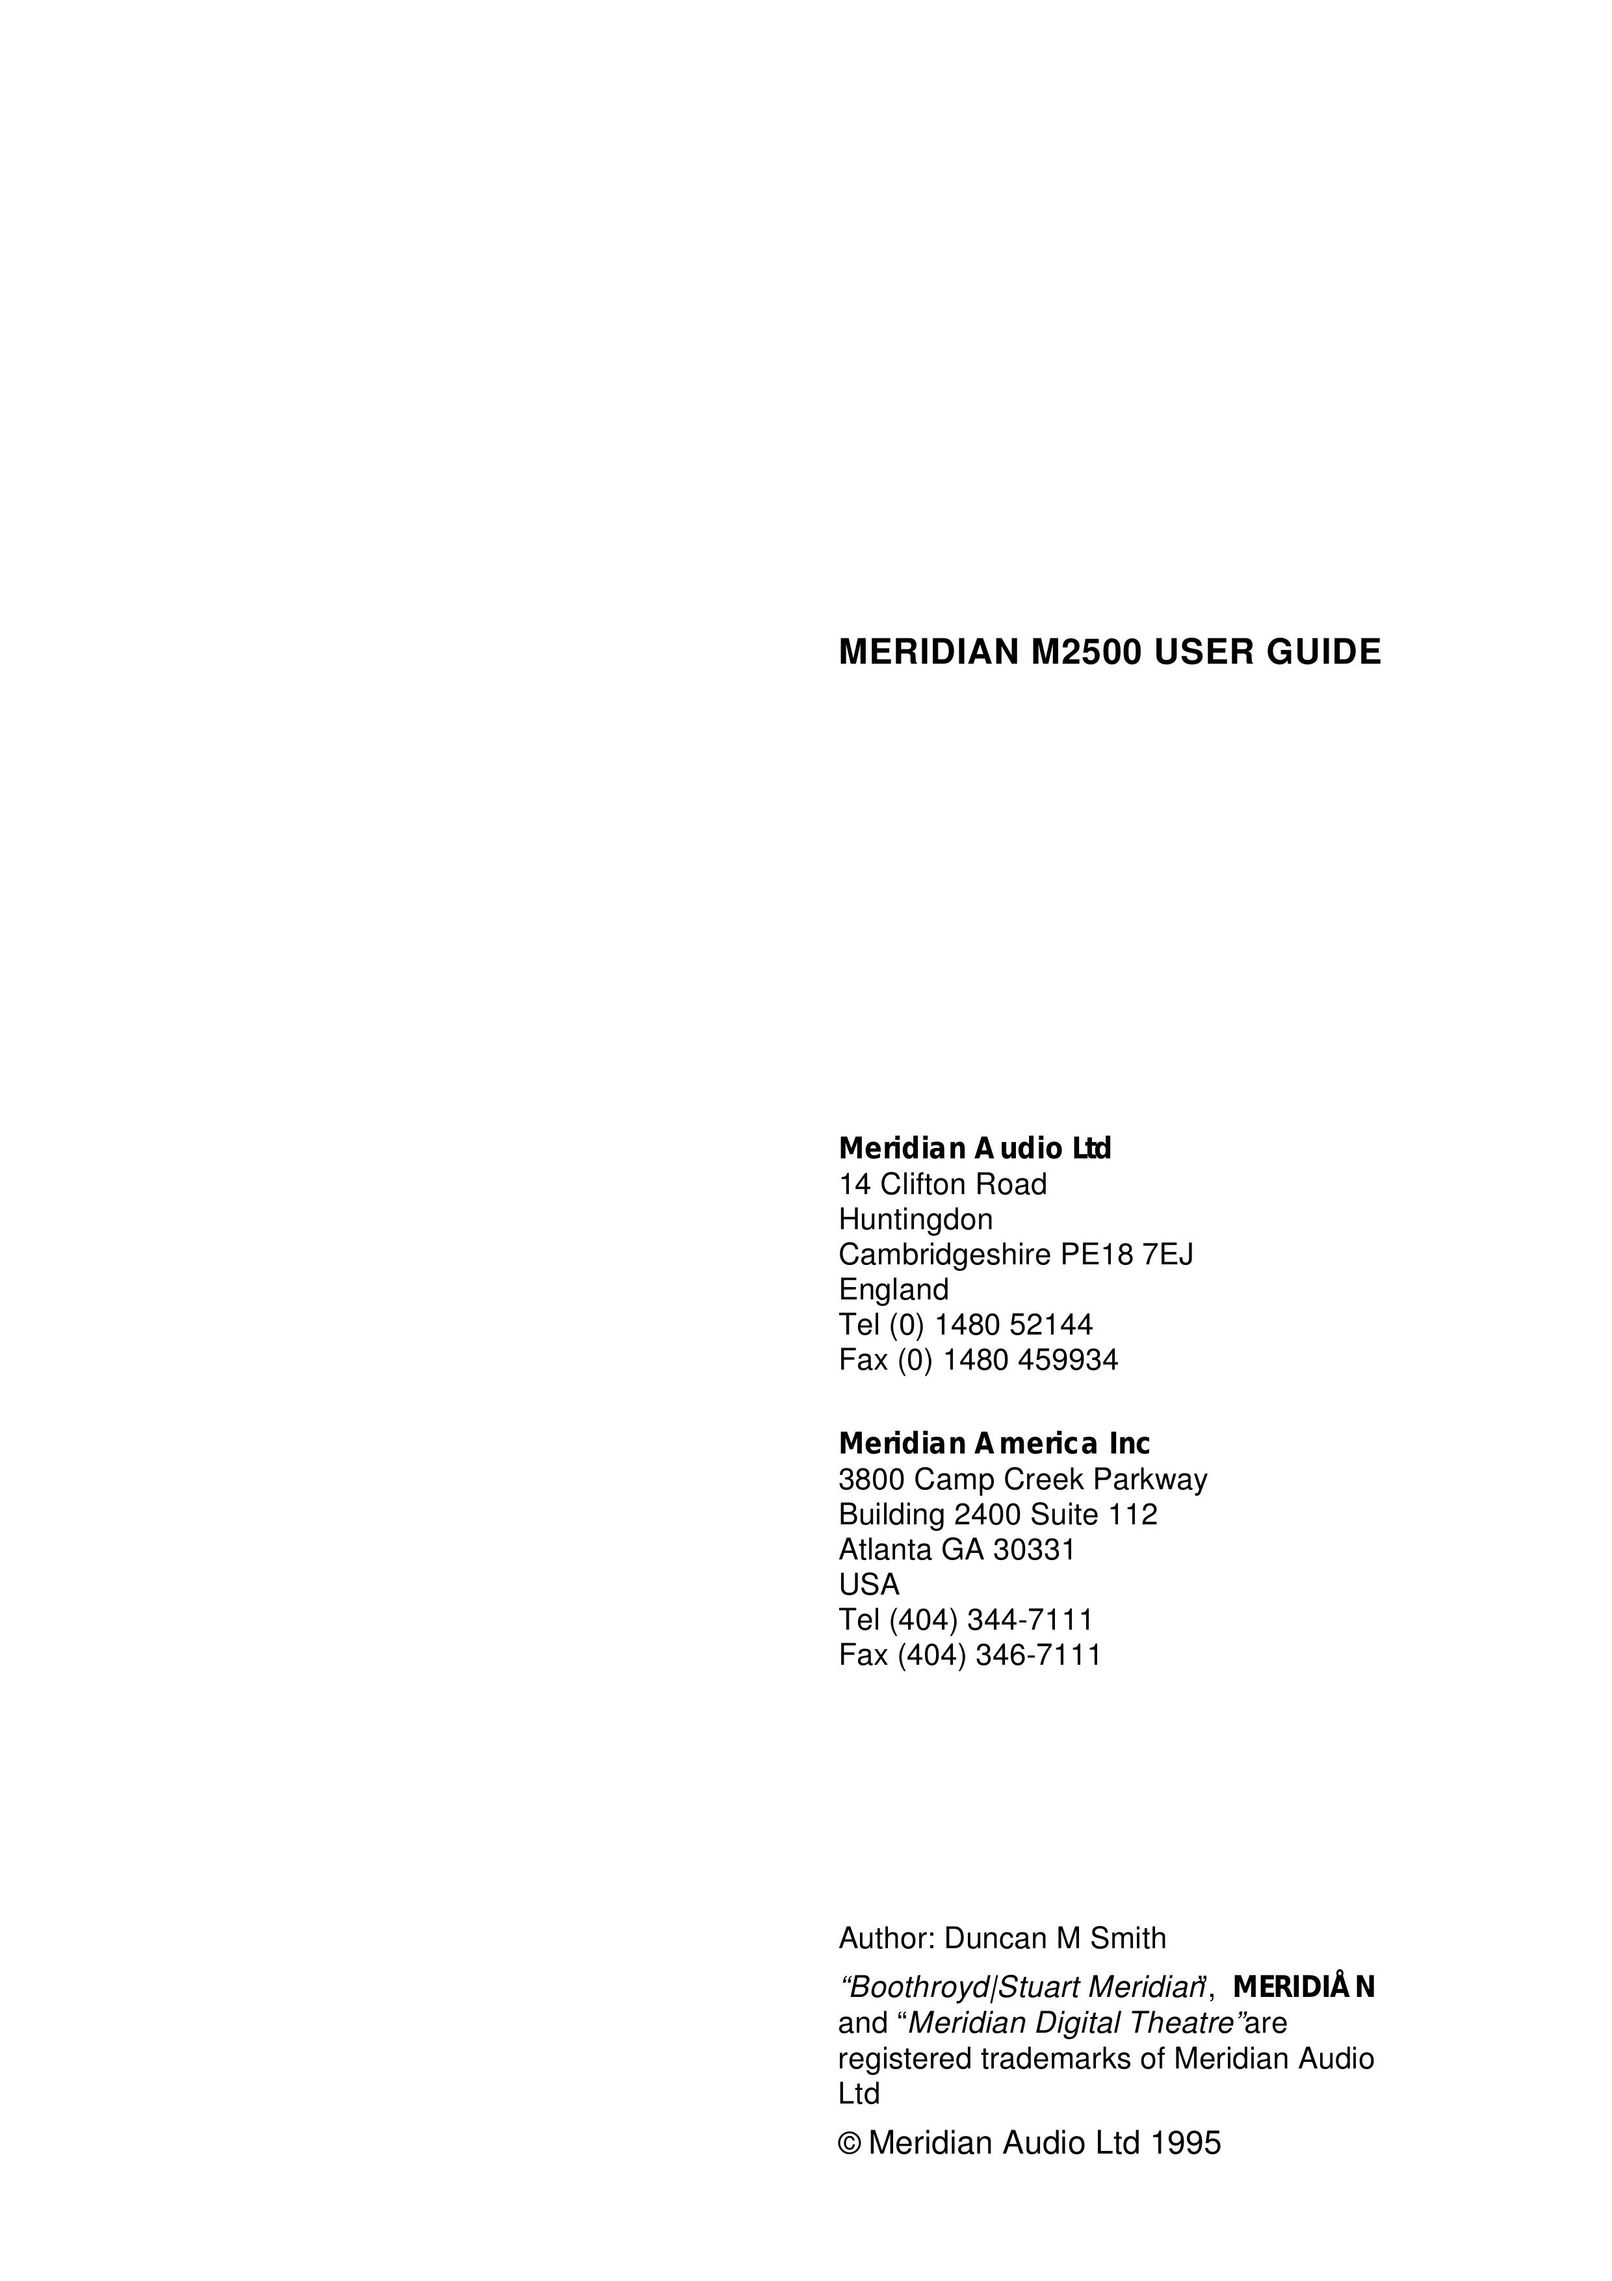 Meridian America M2500 Speaker User Manual